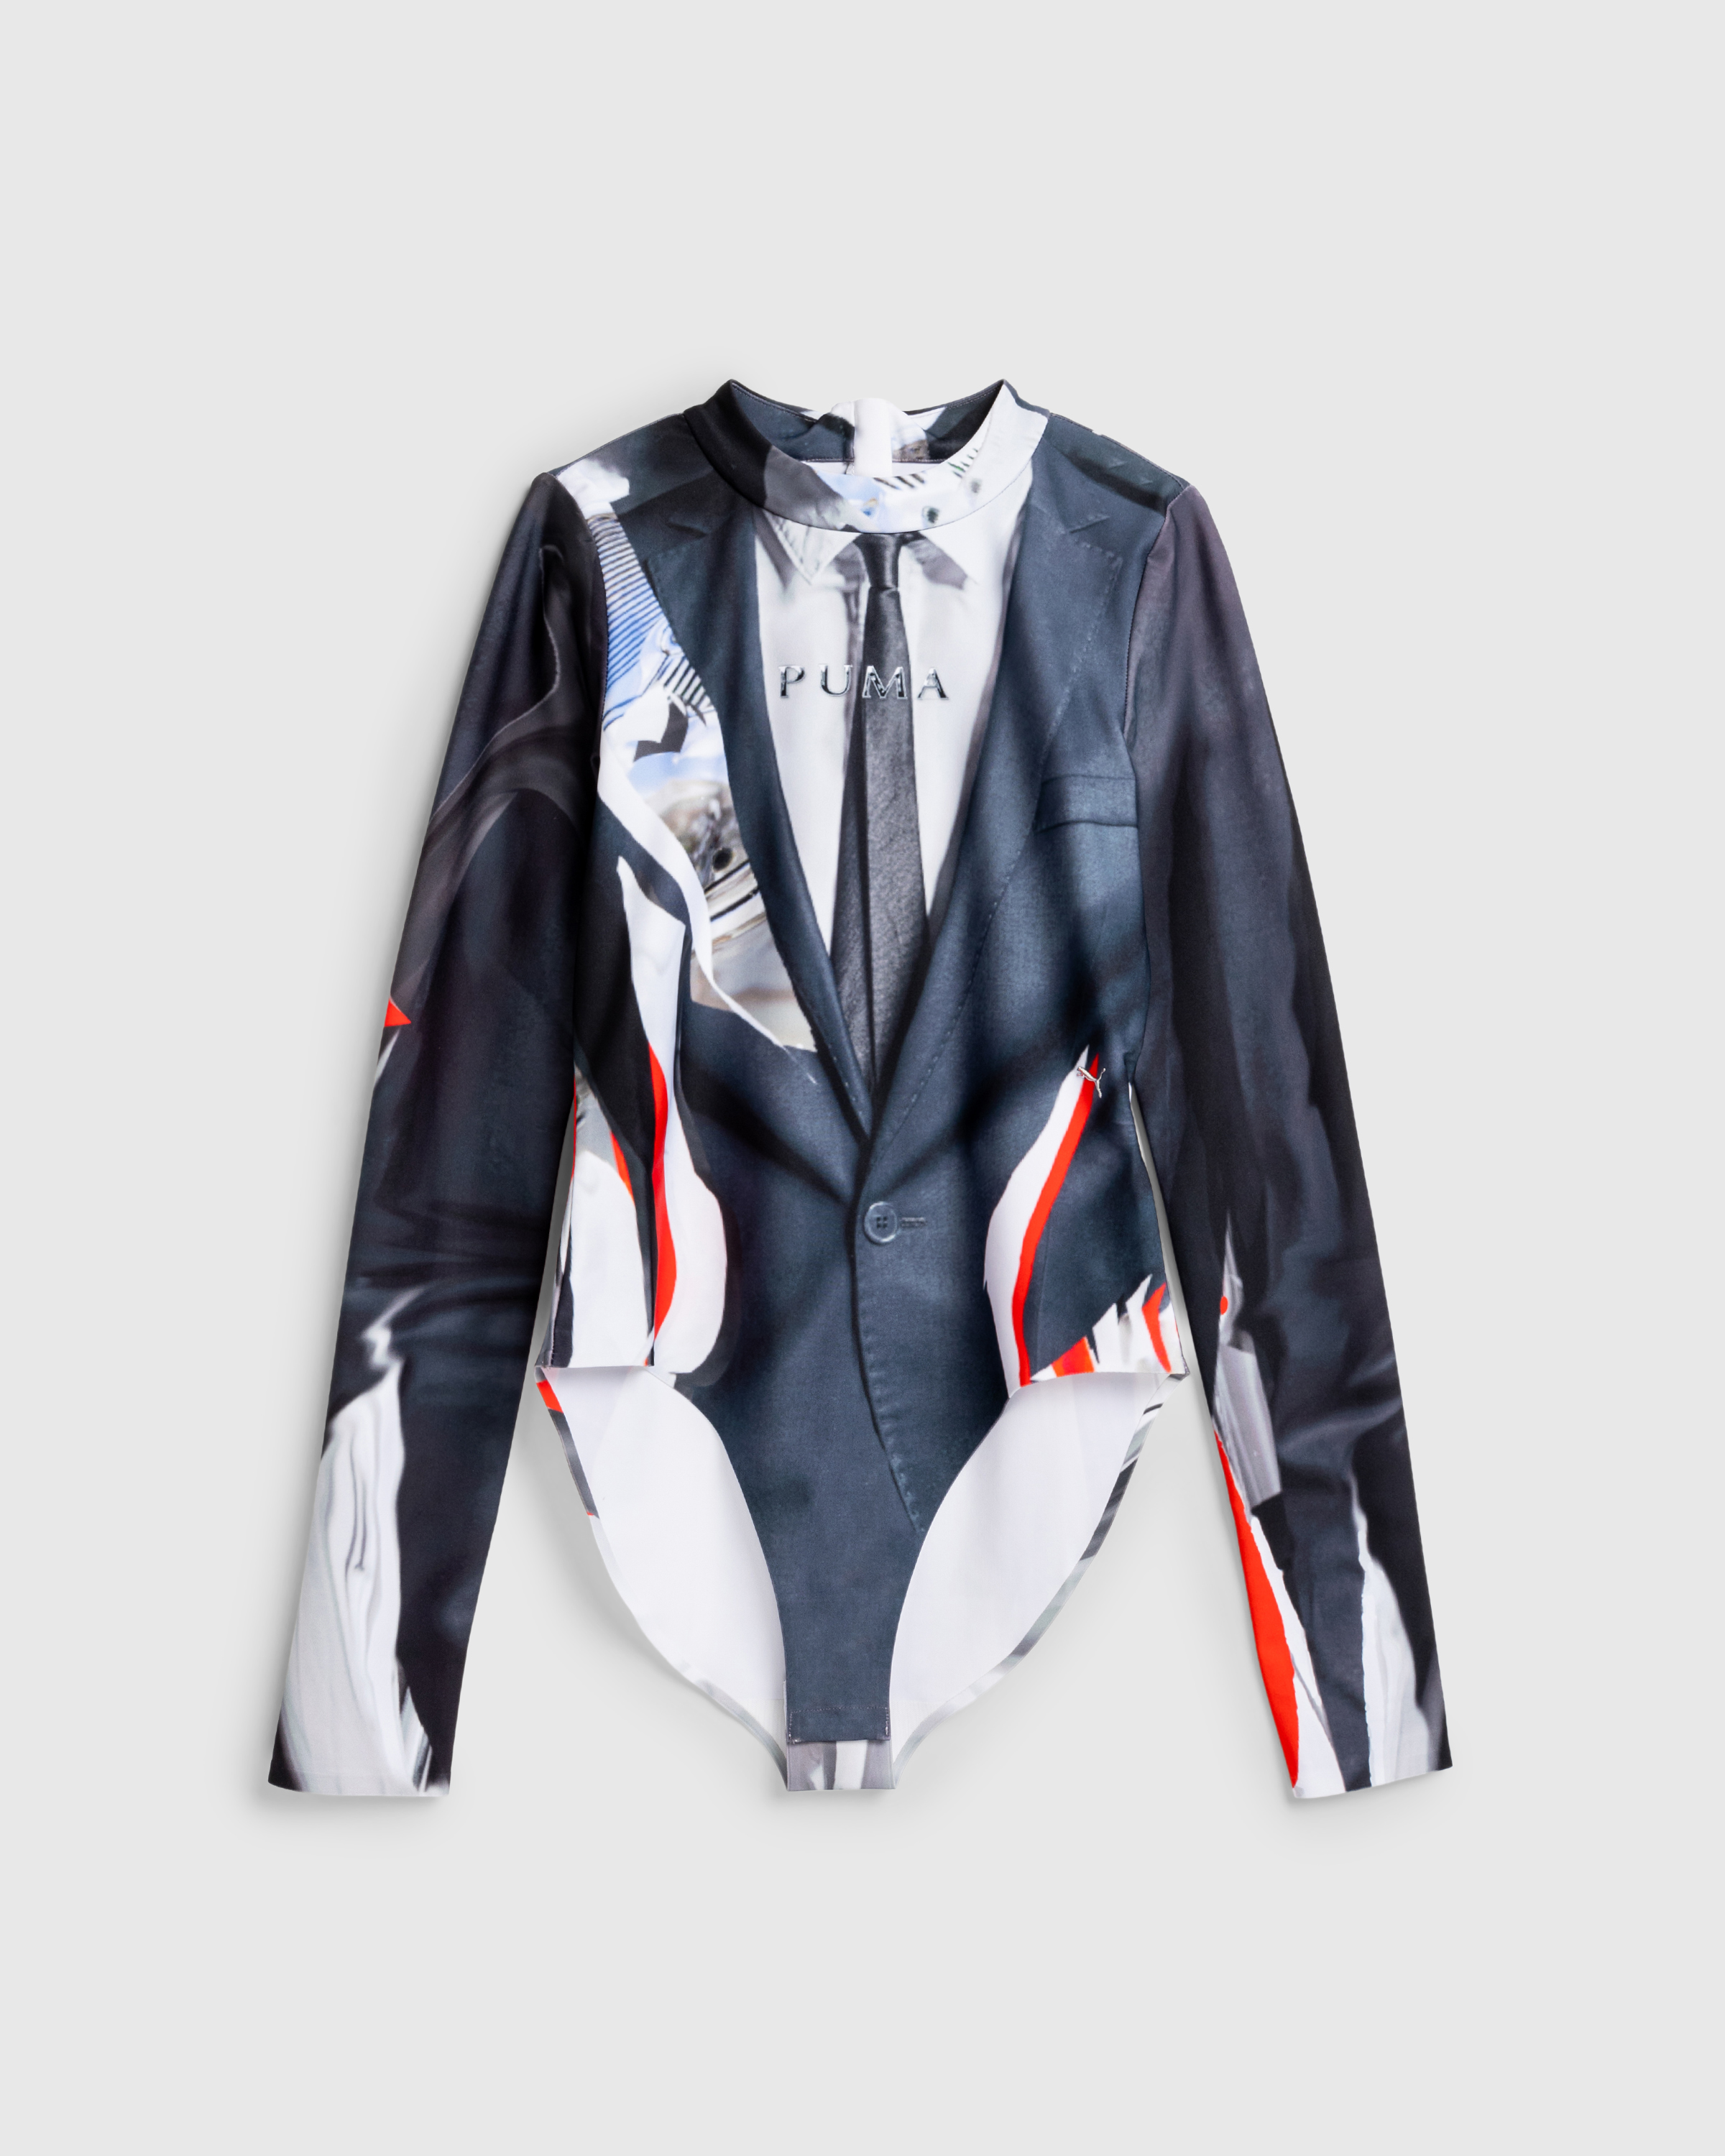 Puma x Ottolinger – Long-Sleeve Bodysuit Multi - Longsleeves - Multi - Image 1